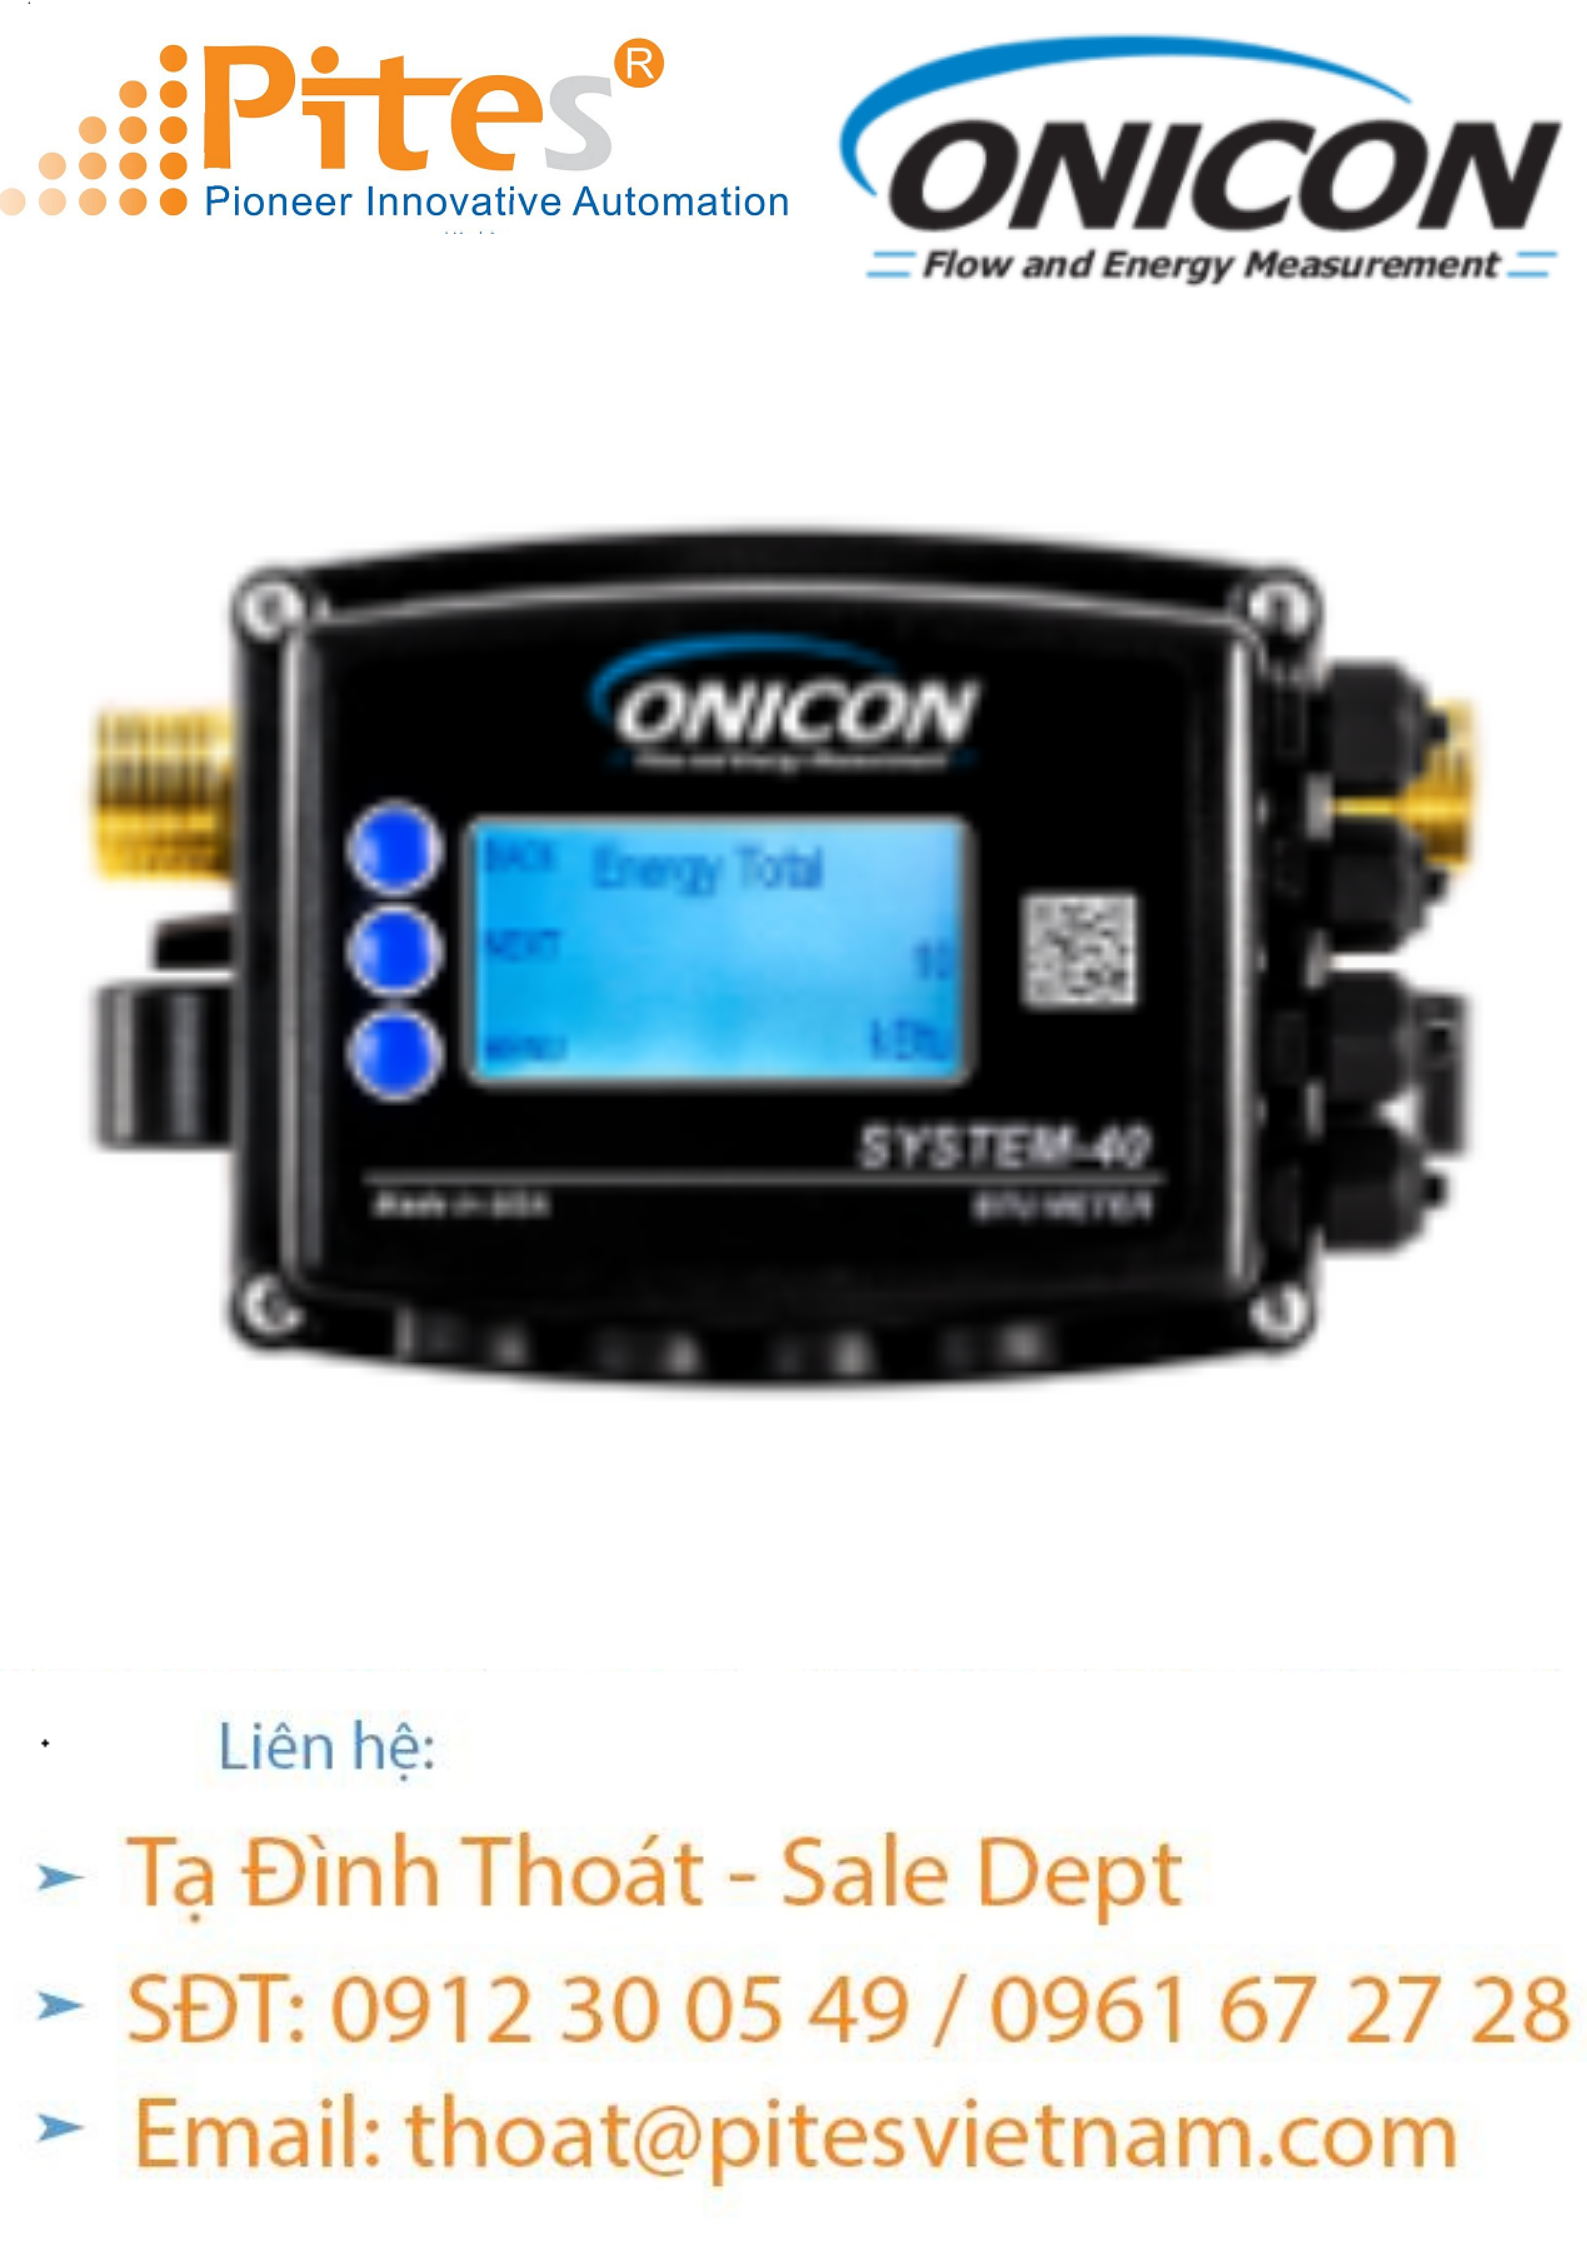 dai-ly-onicon-vietnam-onicon-viet-nam-system-40-btu-measurement-system.png